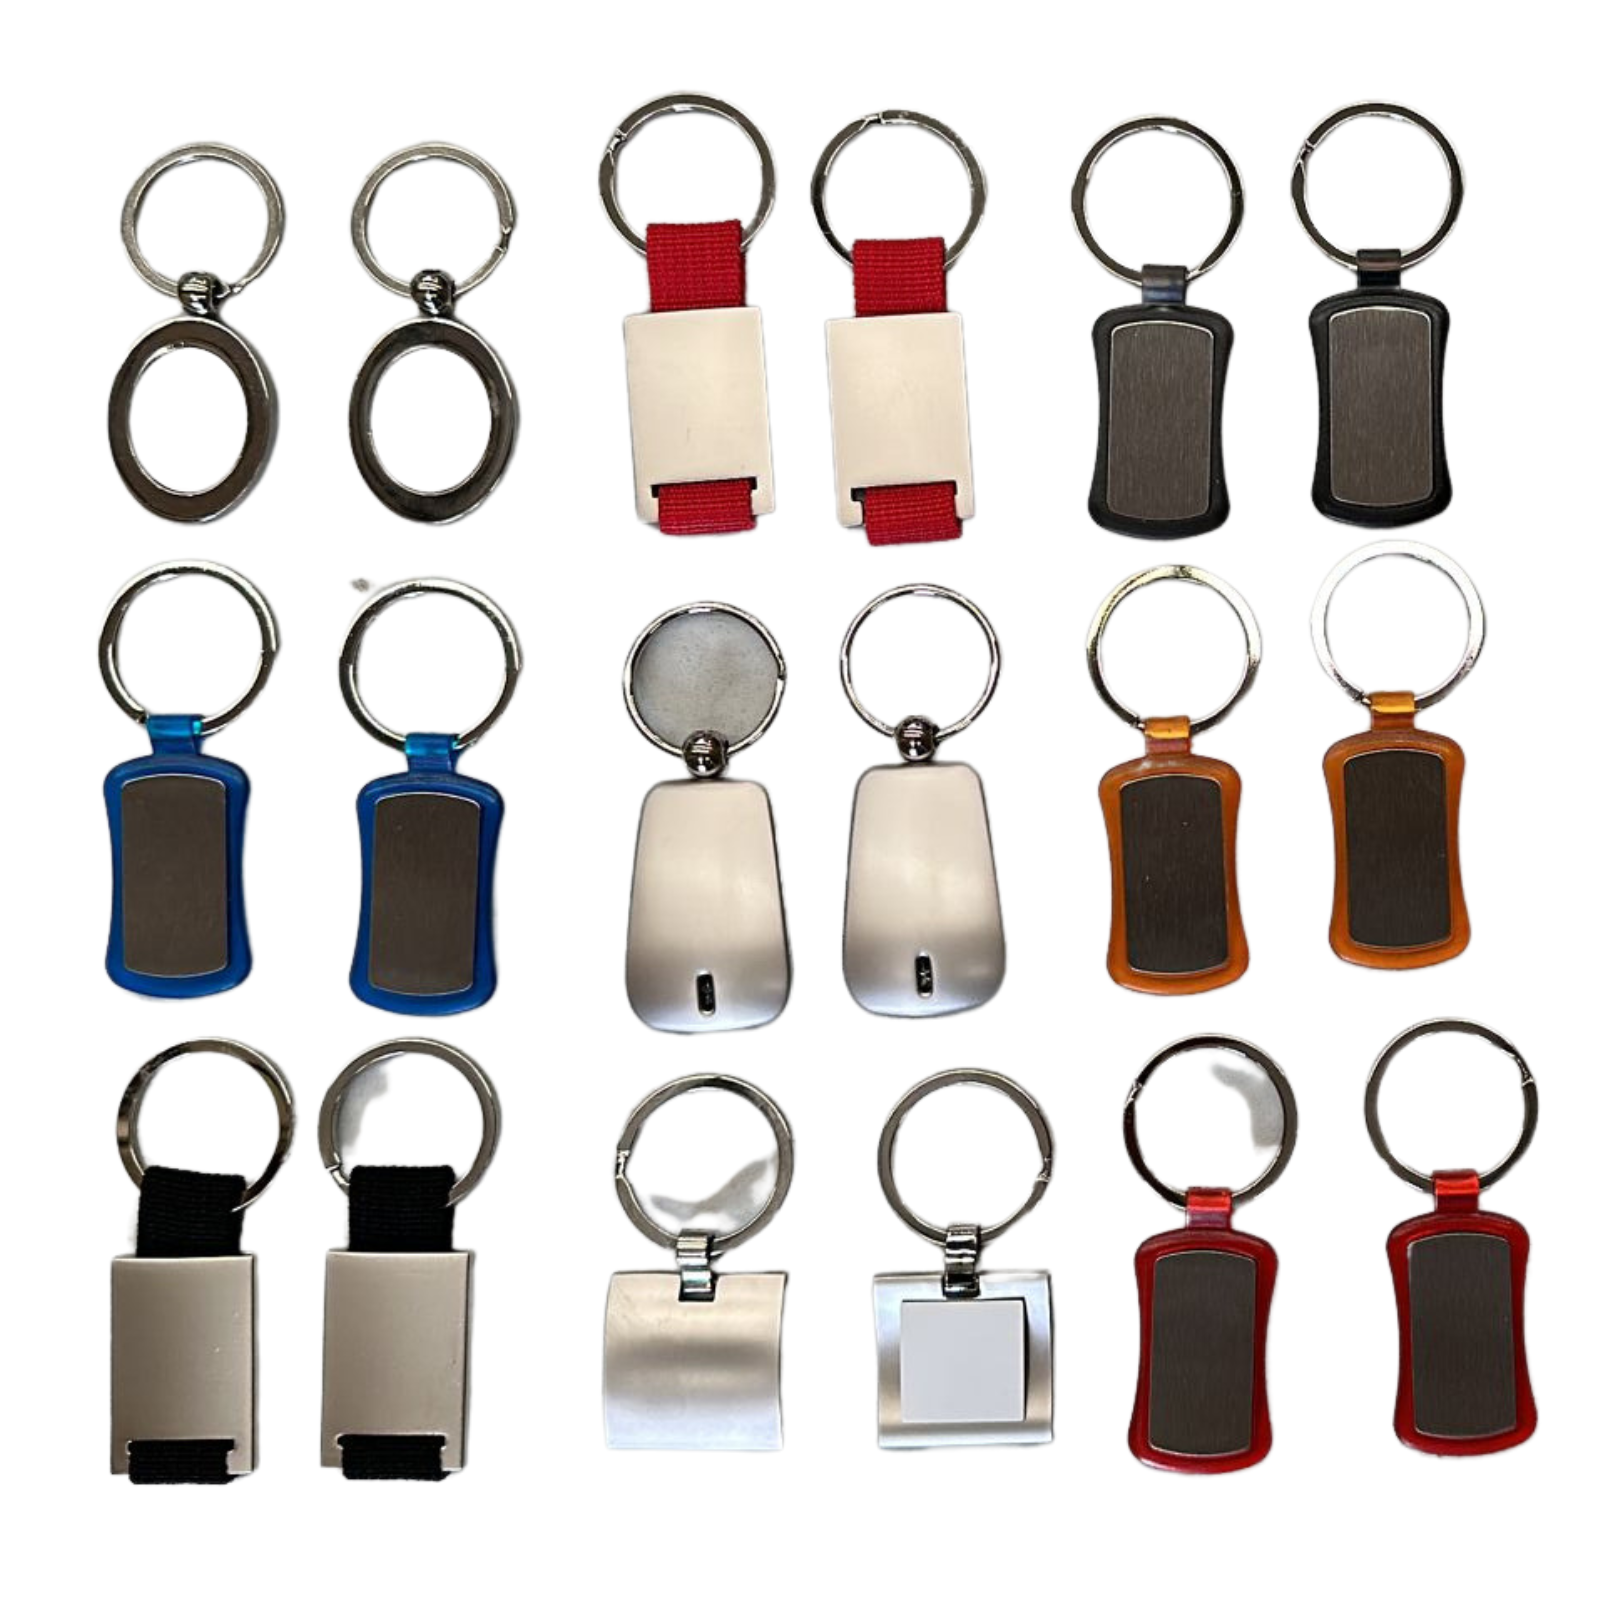 100x High Quality Key Rings Tag Keyring Bag Badge - Assorted Colours & Styles - Bulk